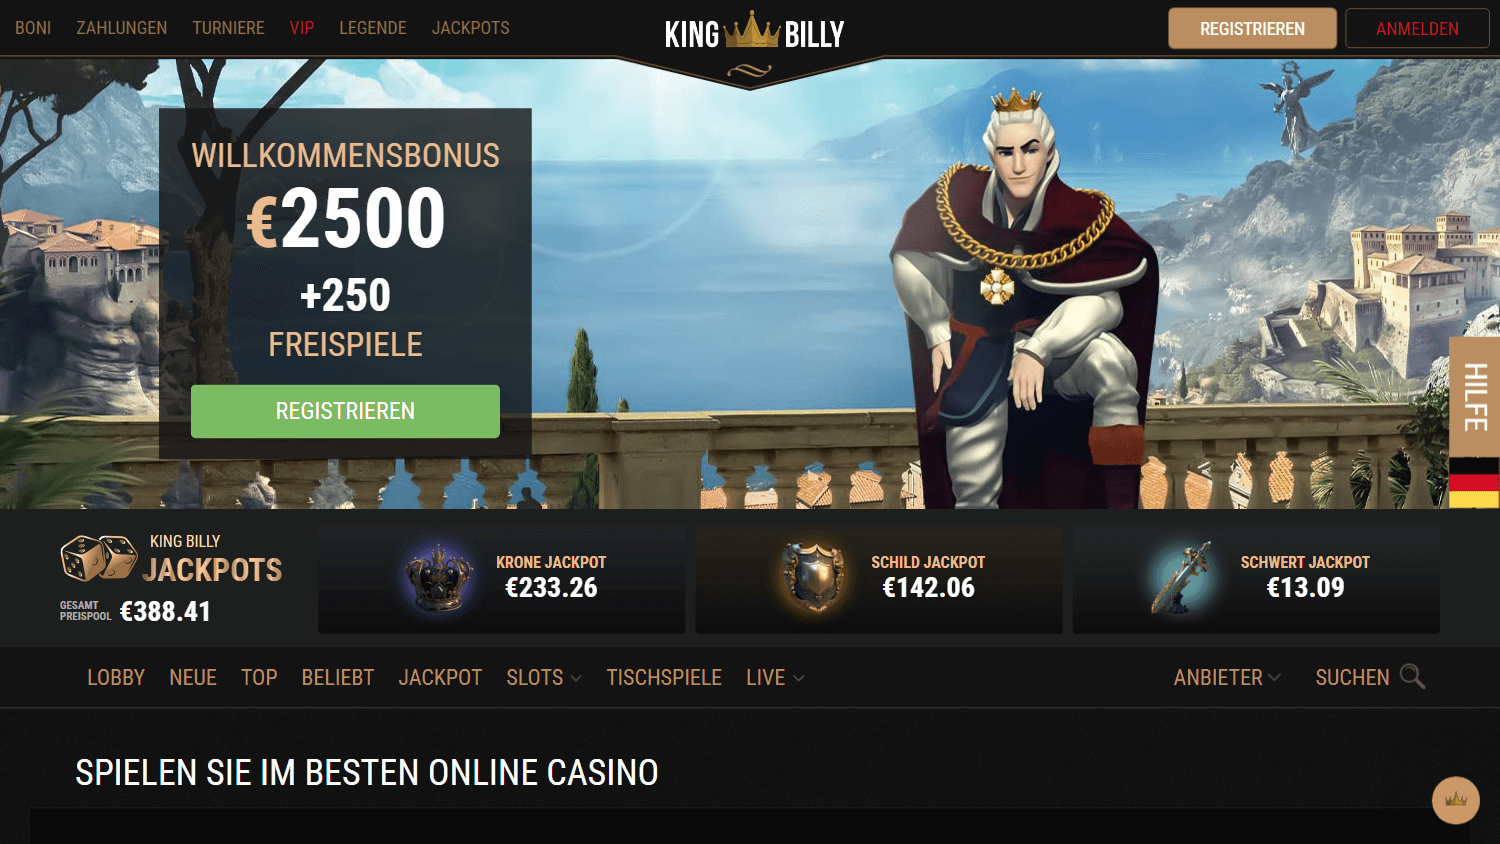 king_billy_casino_(malta)_homepage_desktop